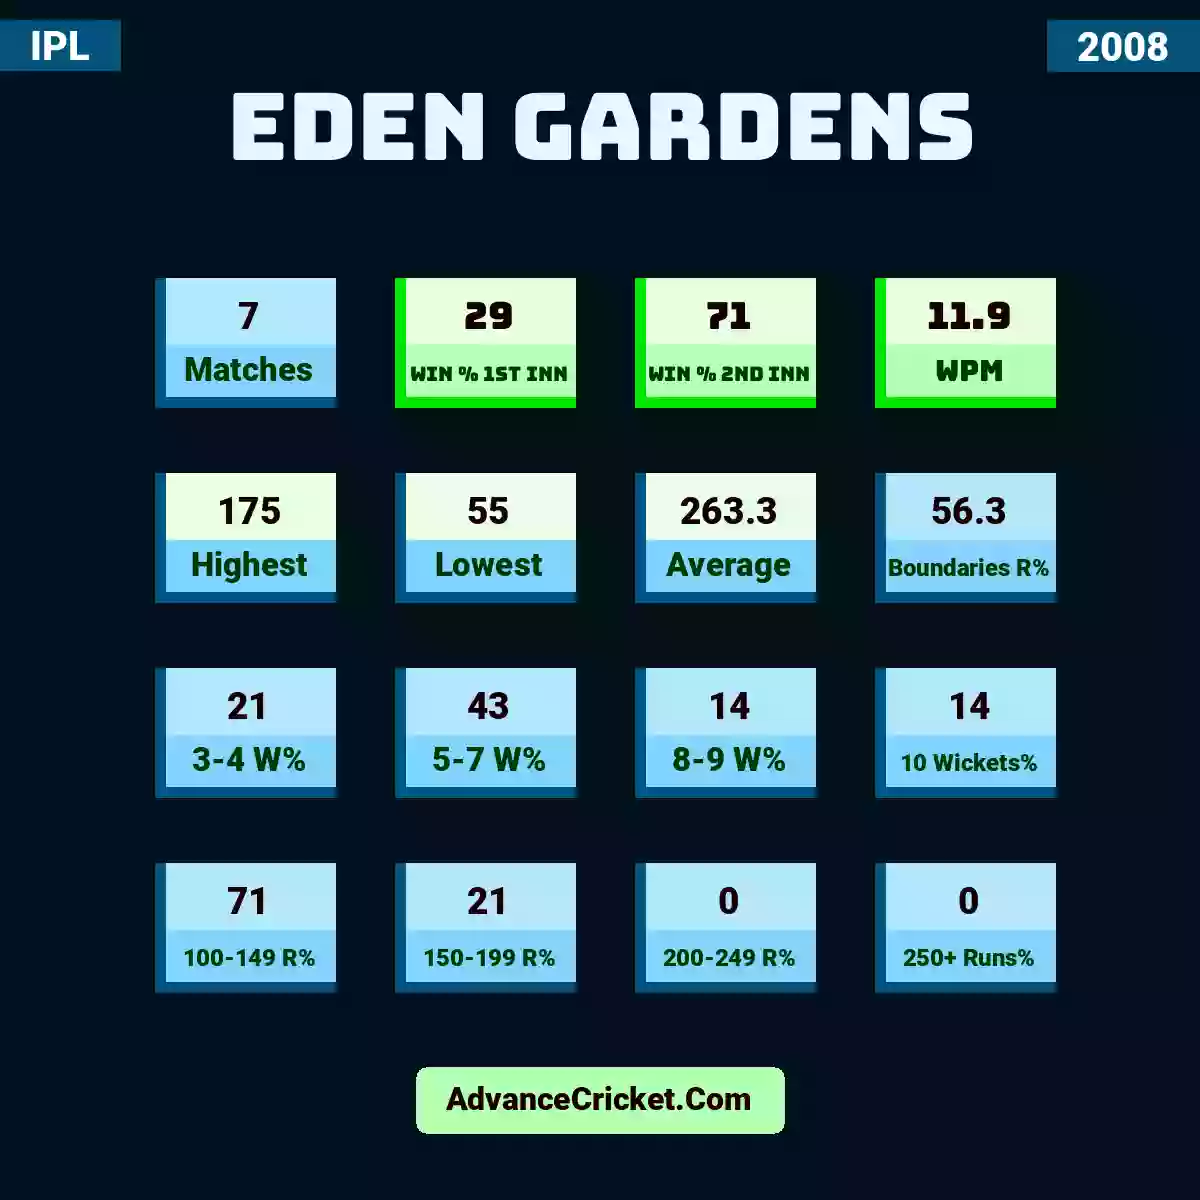 Image showing Eden Gardens with Matches: 7, Win % 1st Inn: 29, Win % 2nd Inn: 71, WPM: 11.9, Highest: 175, Lowest: 55, Average: 263.3, Boundaries R%: 56.3, 3-4 W%: 21, 5-7 W%: 43, 8-9 W%: 14, 10 Wickets%: 14, 100-149 R%: 71, 150-199 R%: 21, 200-249 R%: 0, 250+ Runs%: 0.